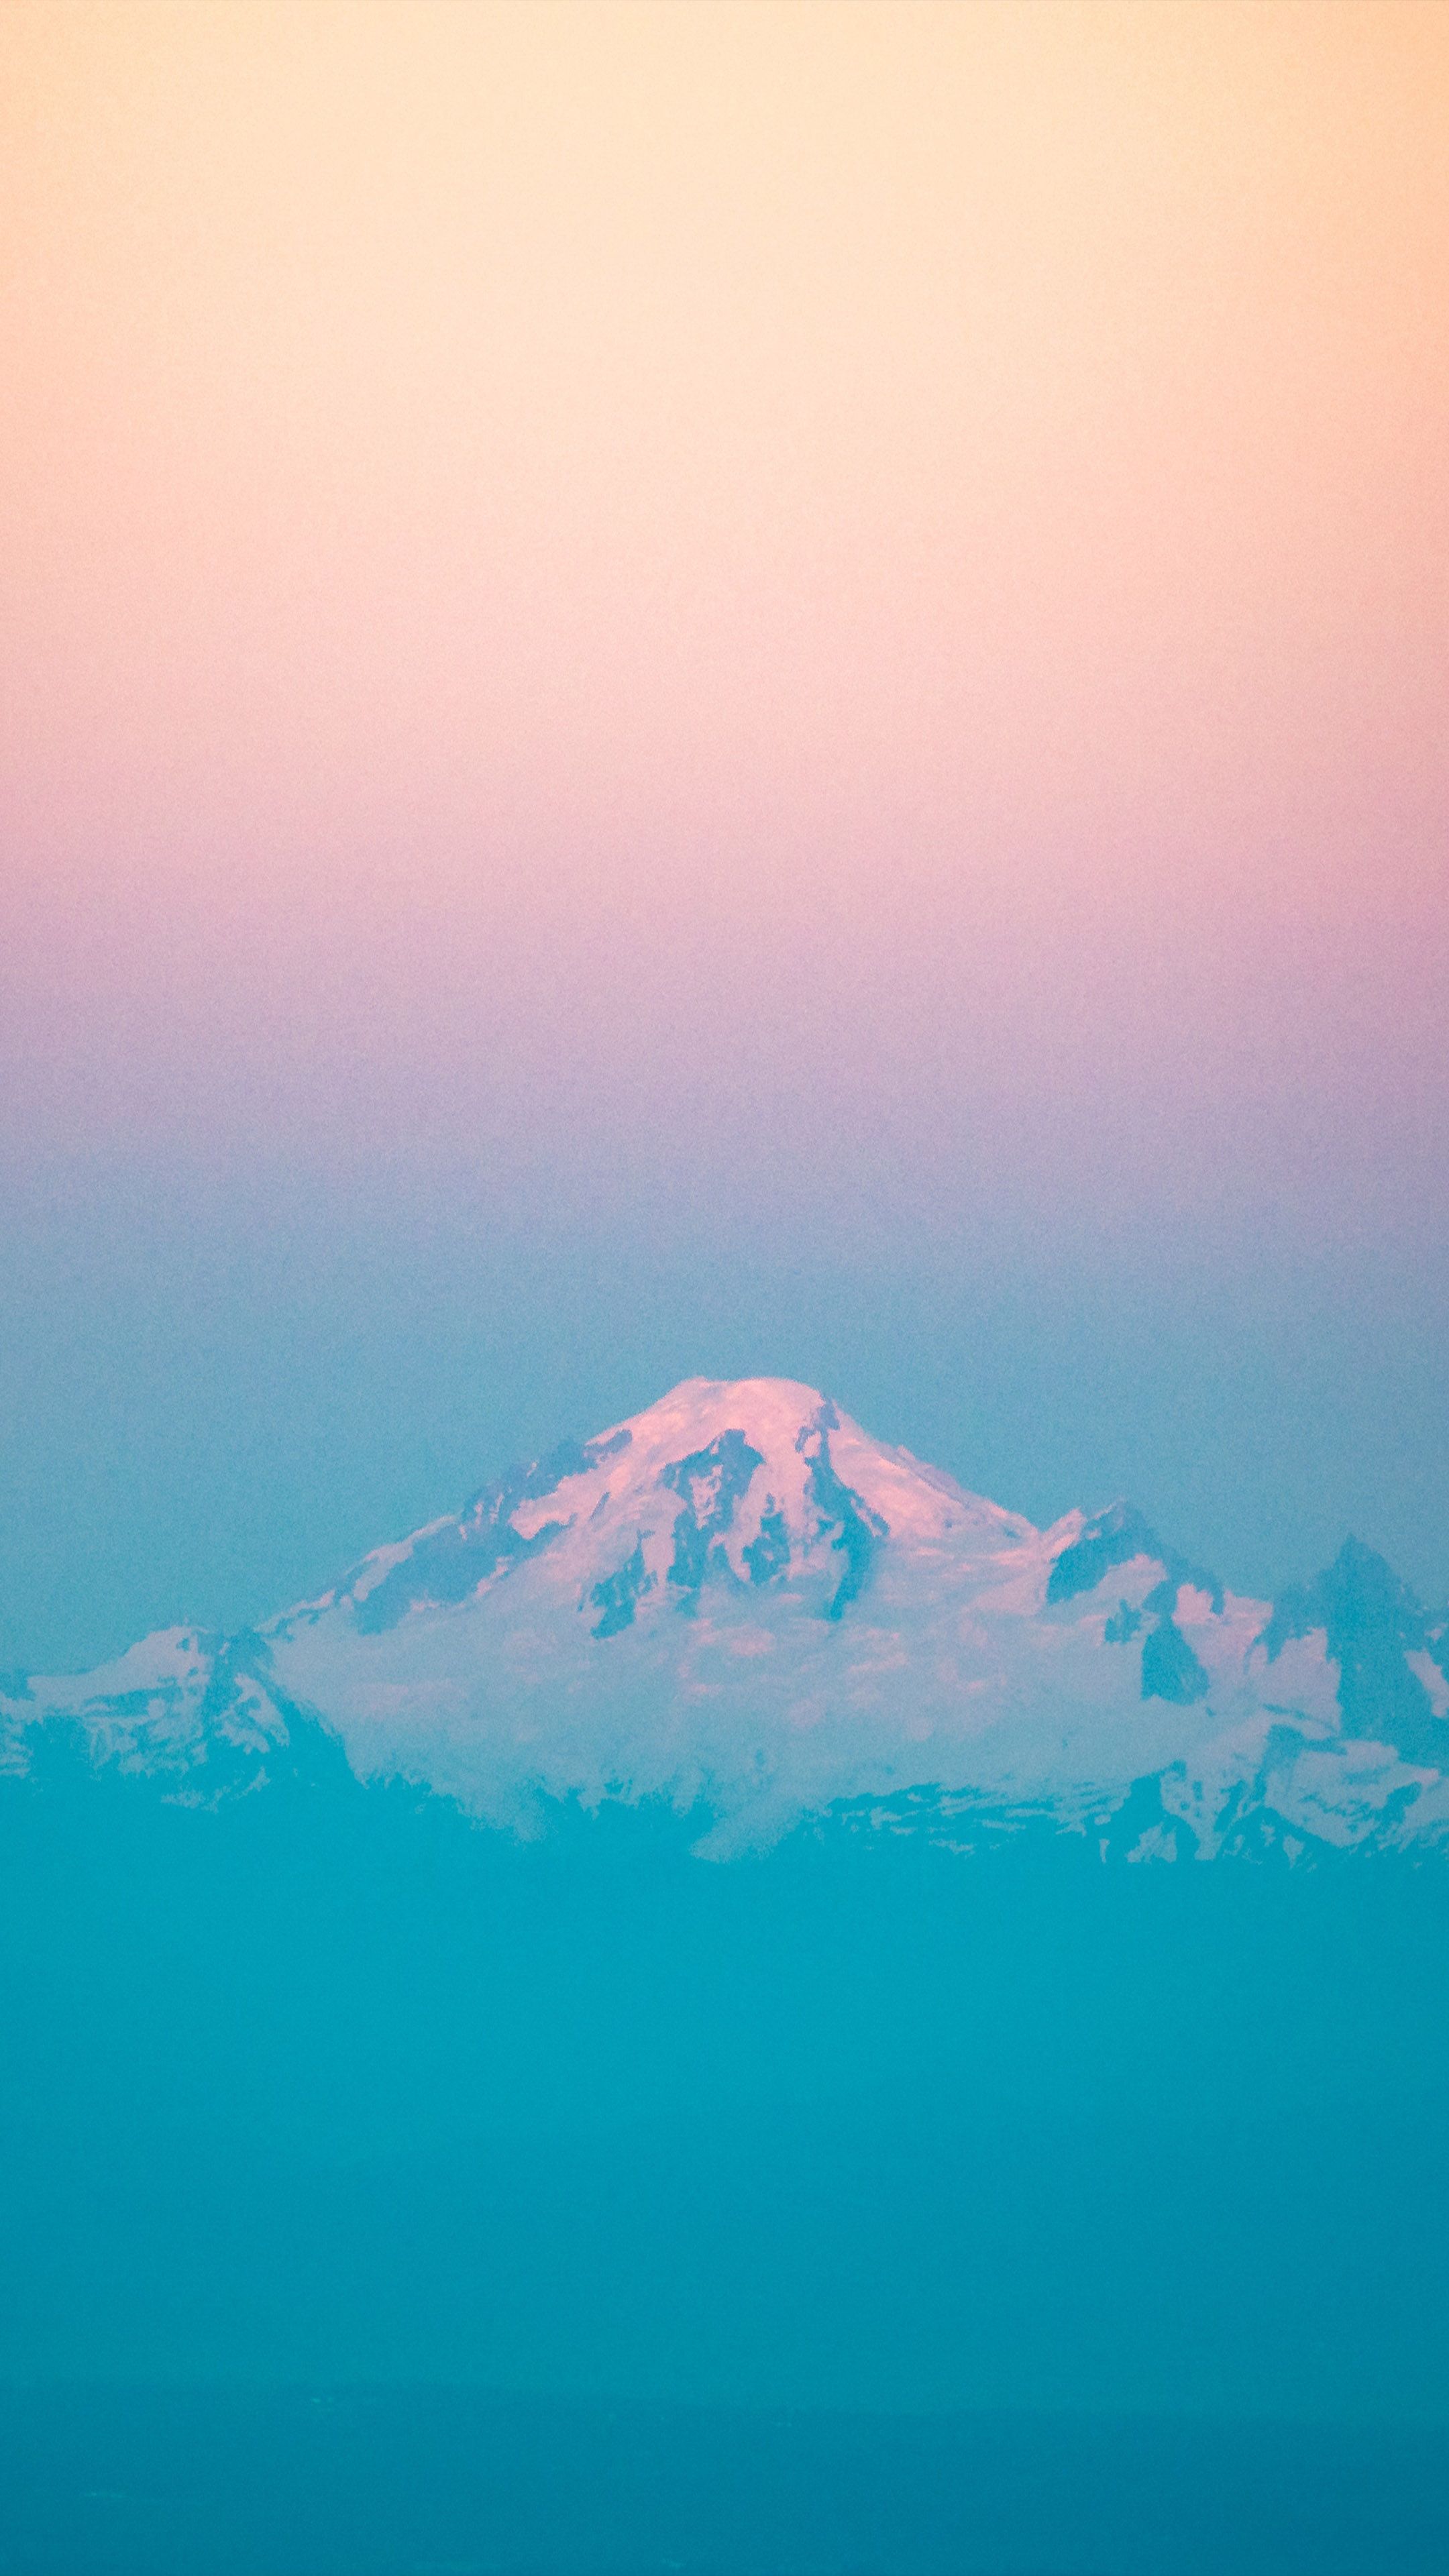 Mountain Peak Sunset Orange Blue Mist 4K Ultra HD Mobile Wallpaper